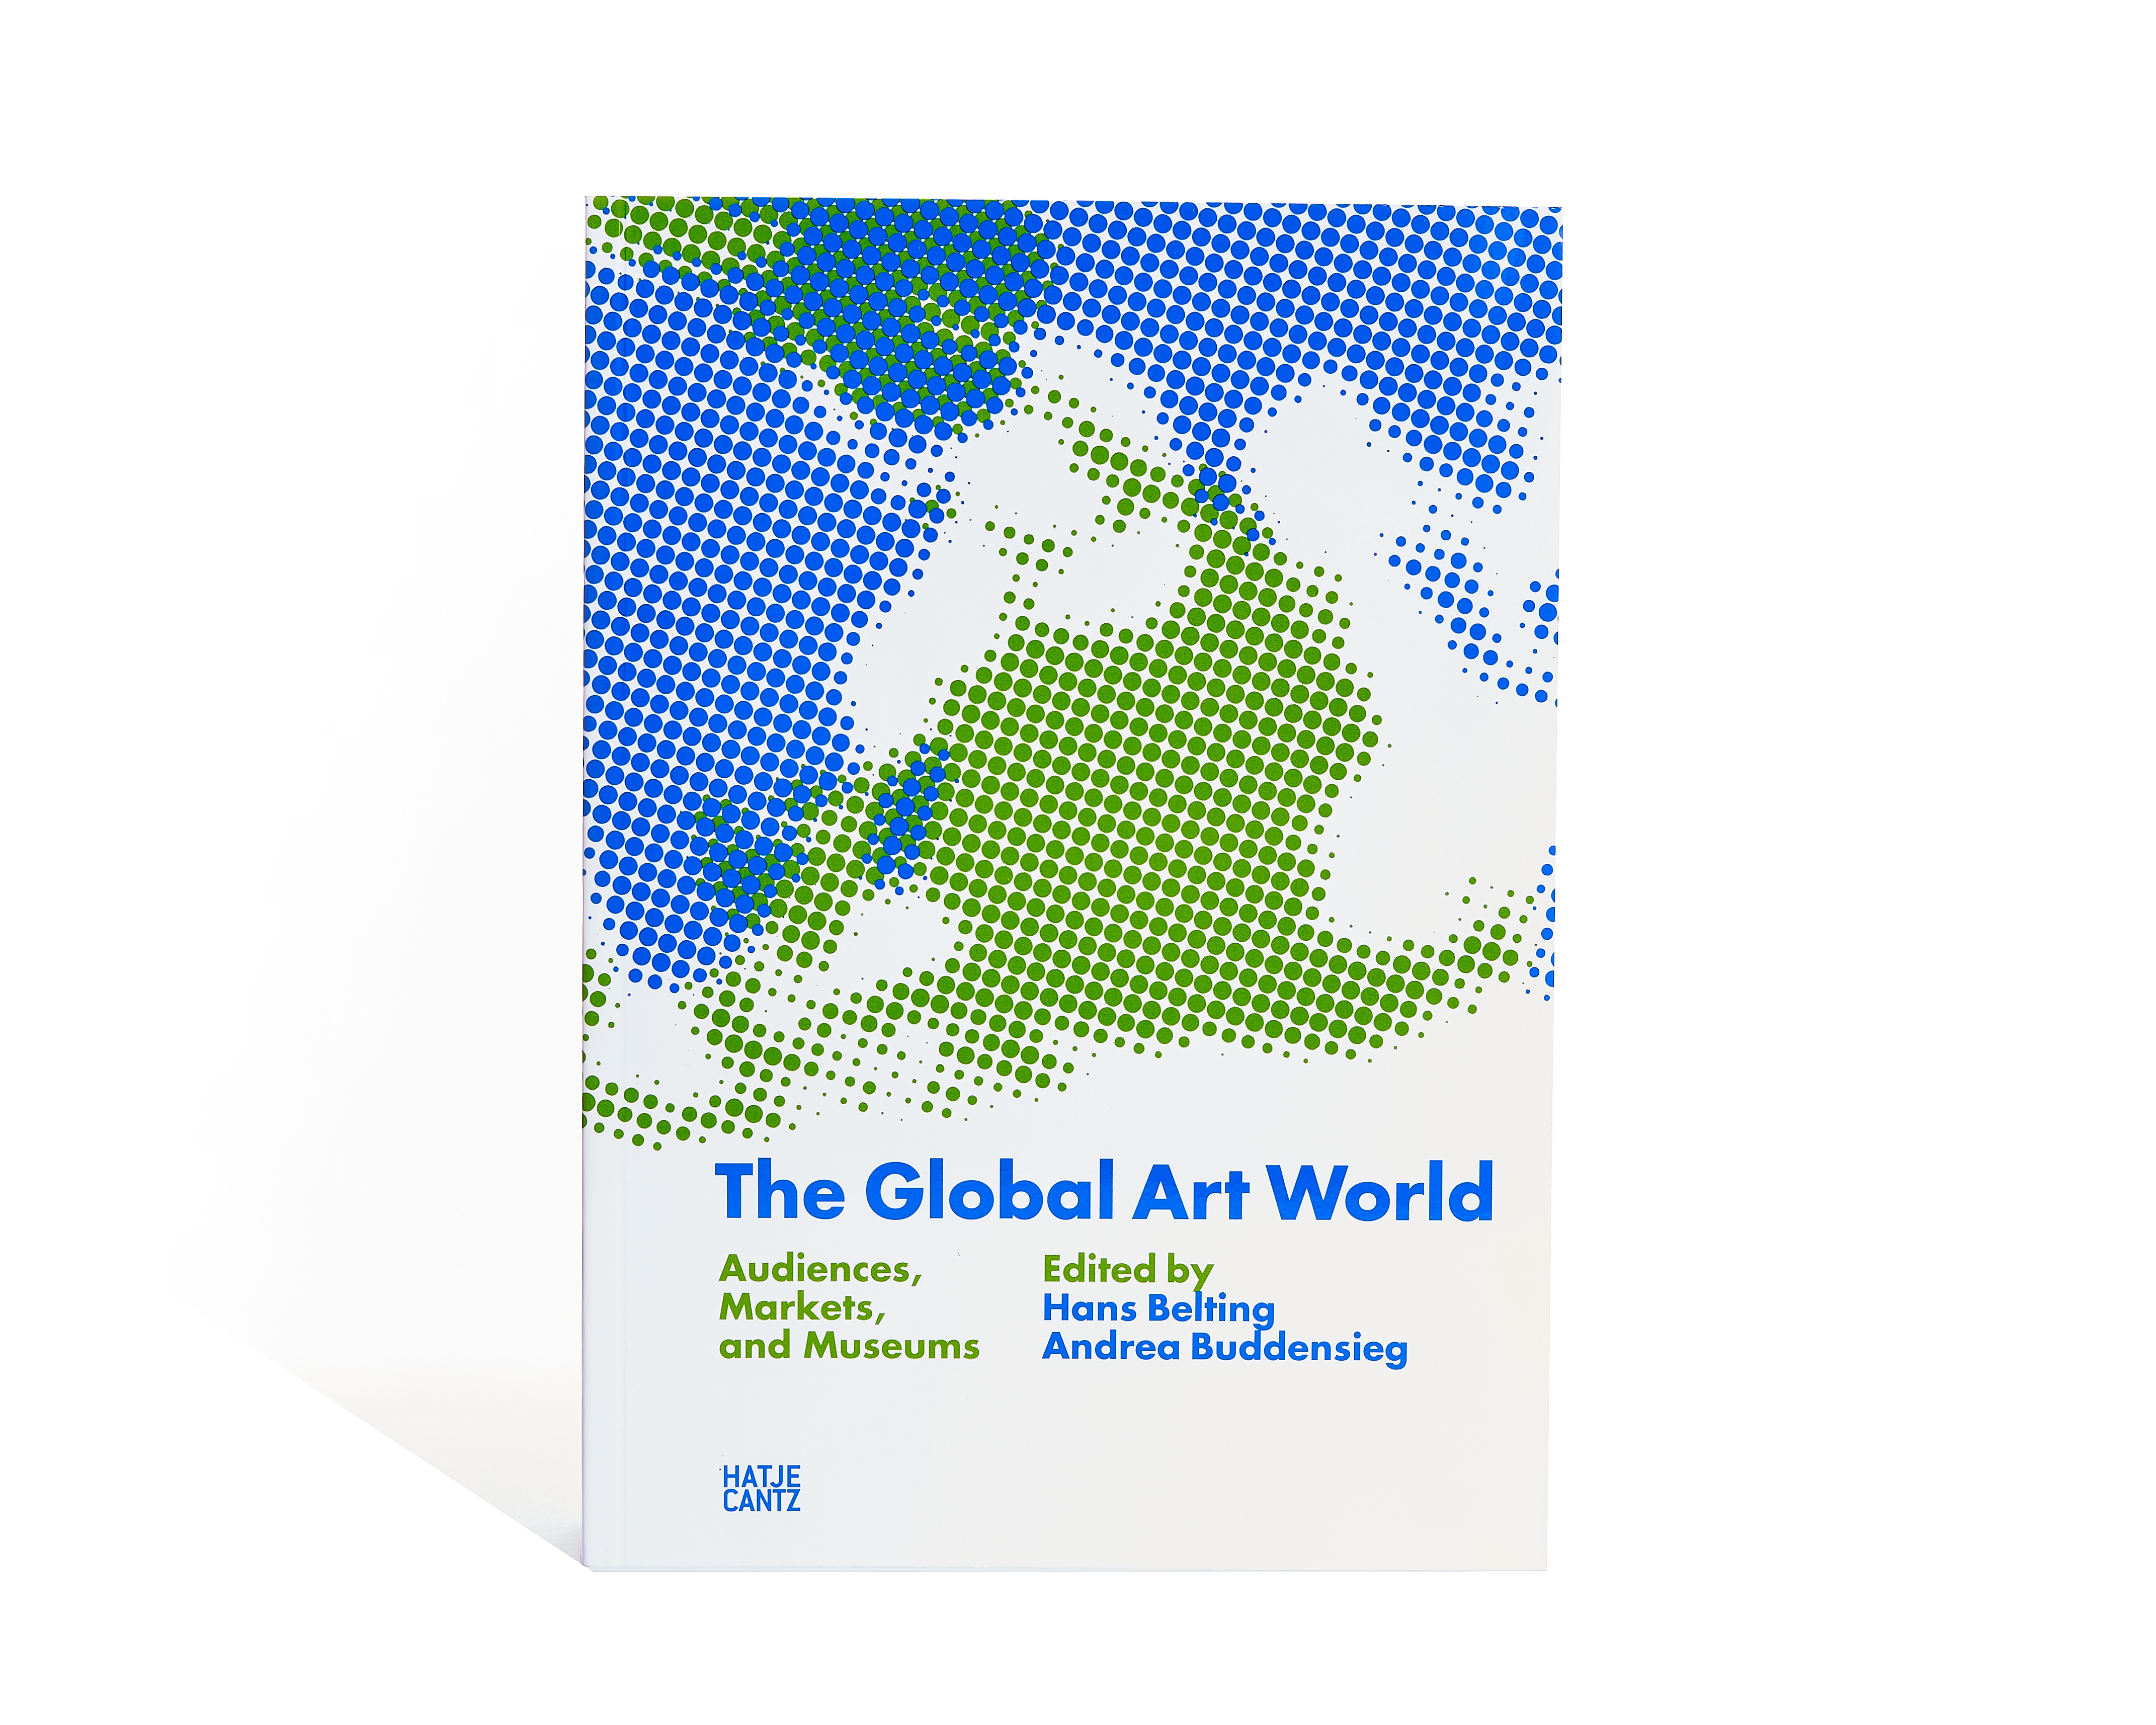 The Global Art World